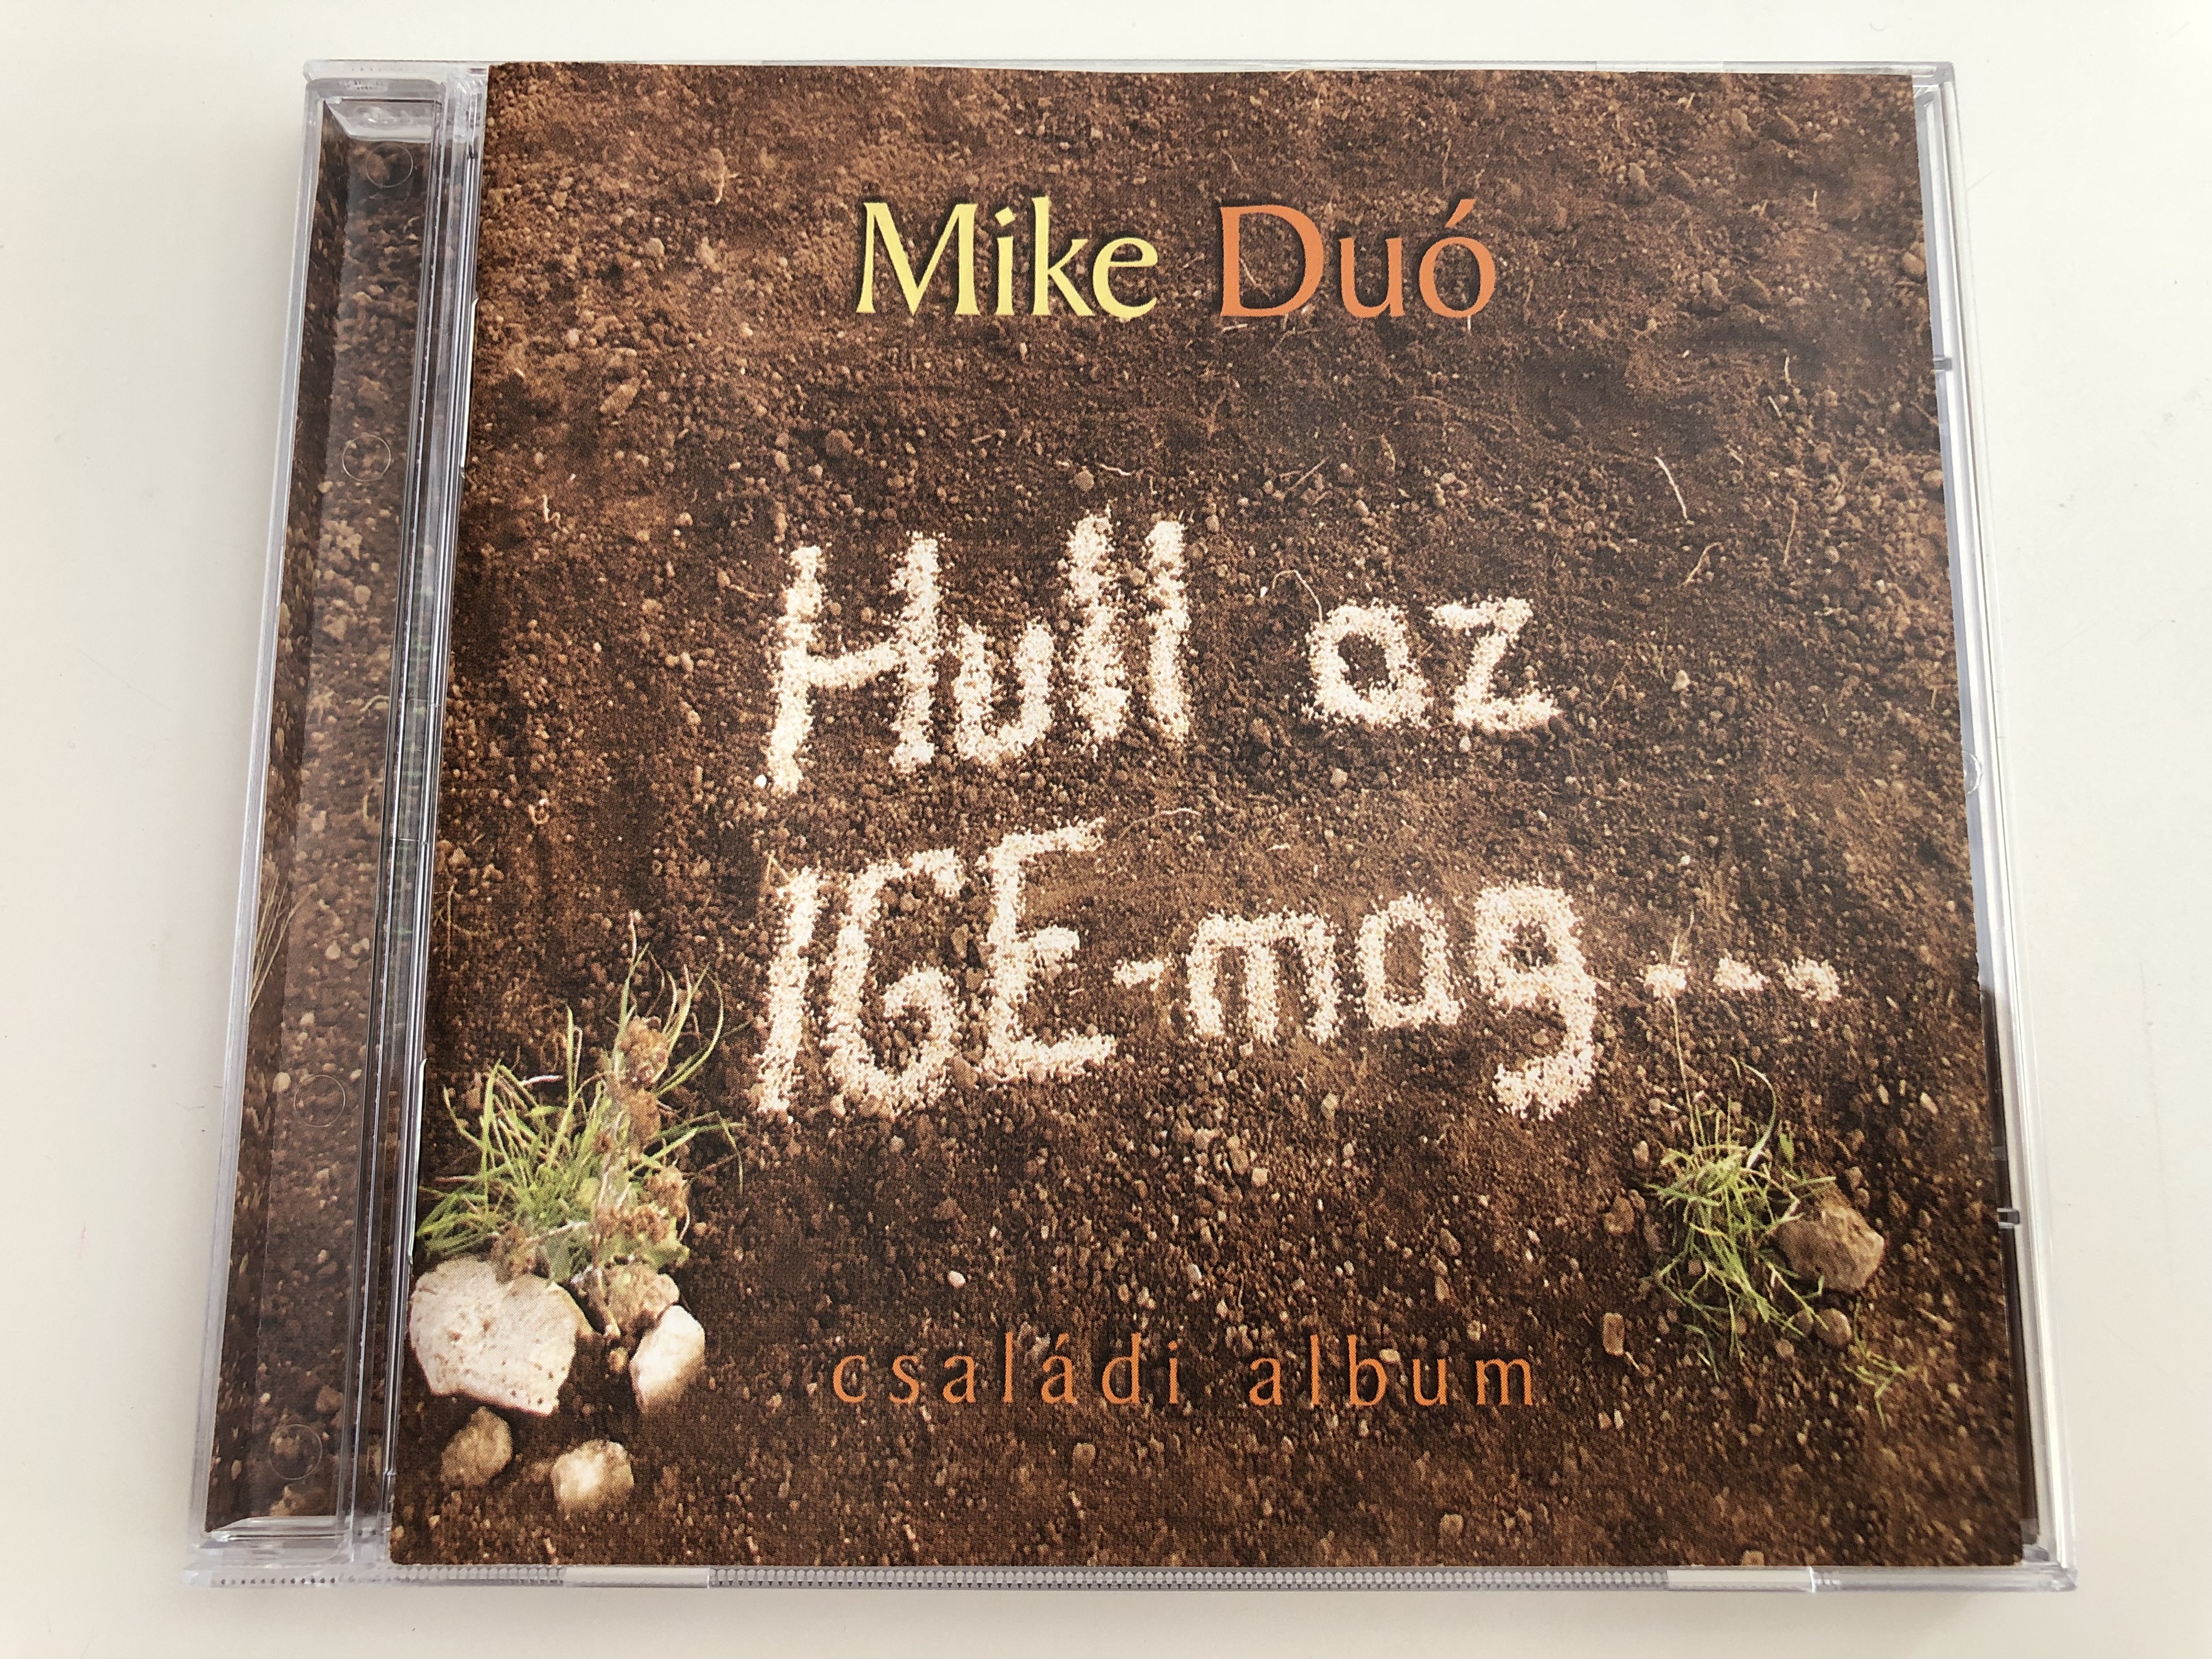 -mike-du-hull-az-ige-mag-csal-di-album-audio-cd-christian-praise-and-worship-songs-in-hungarian-1-.jpg